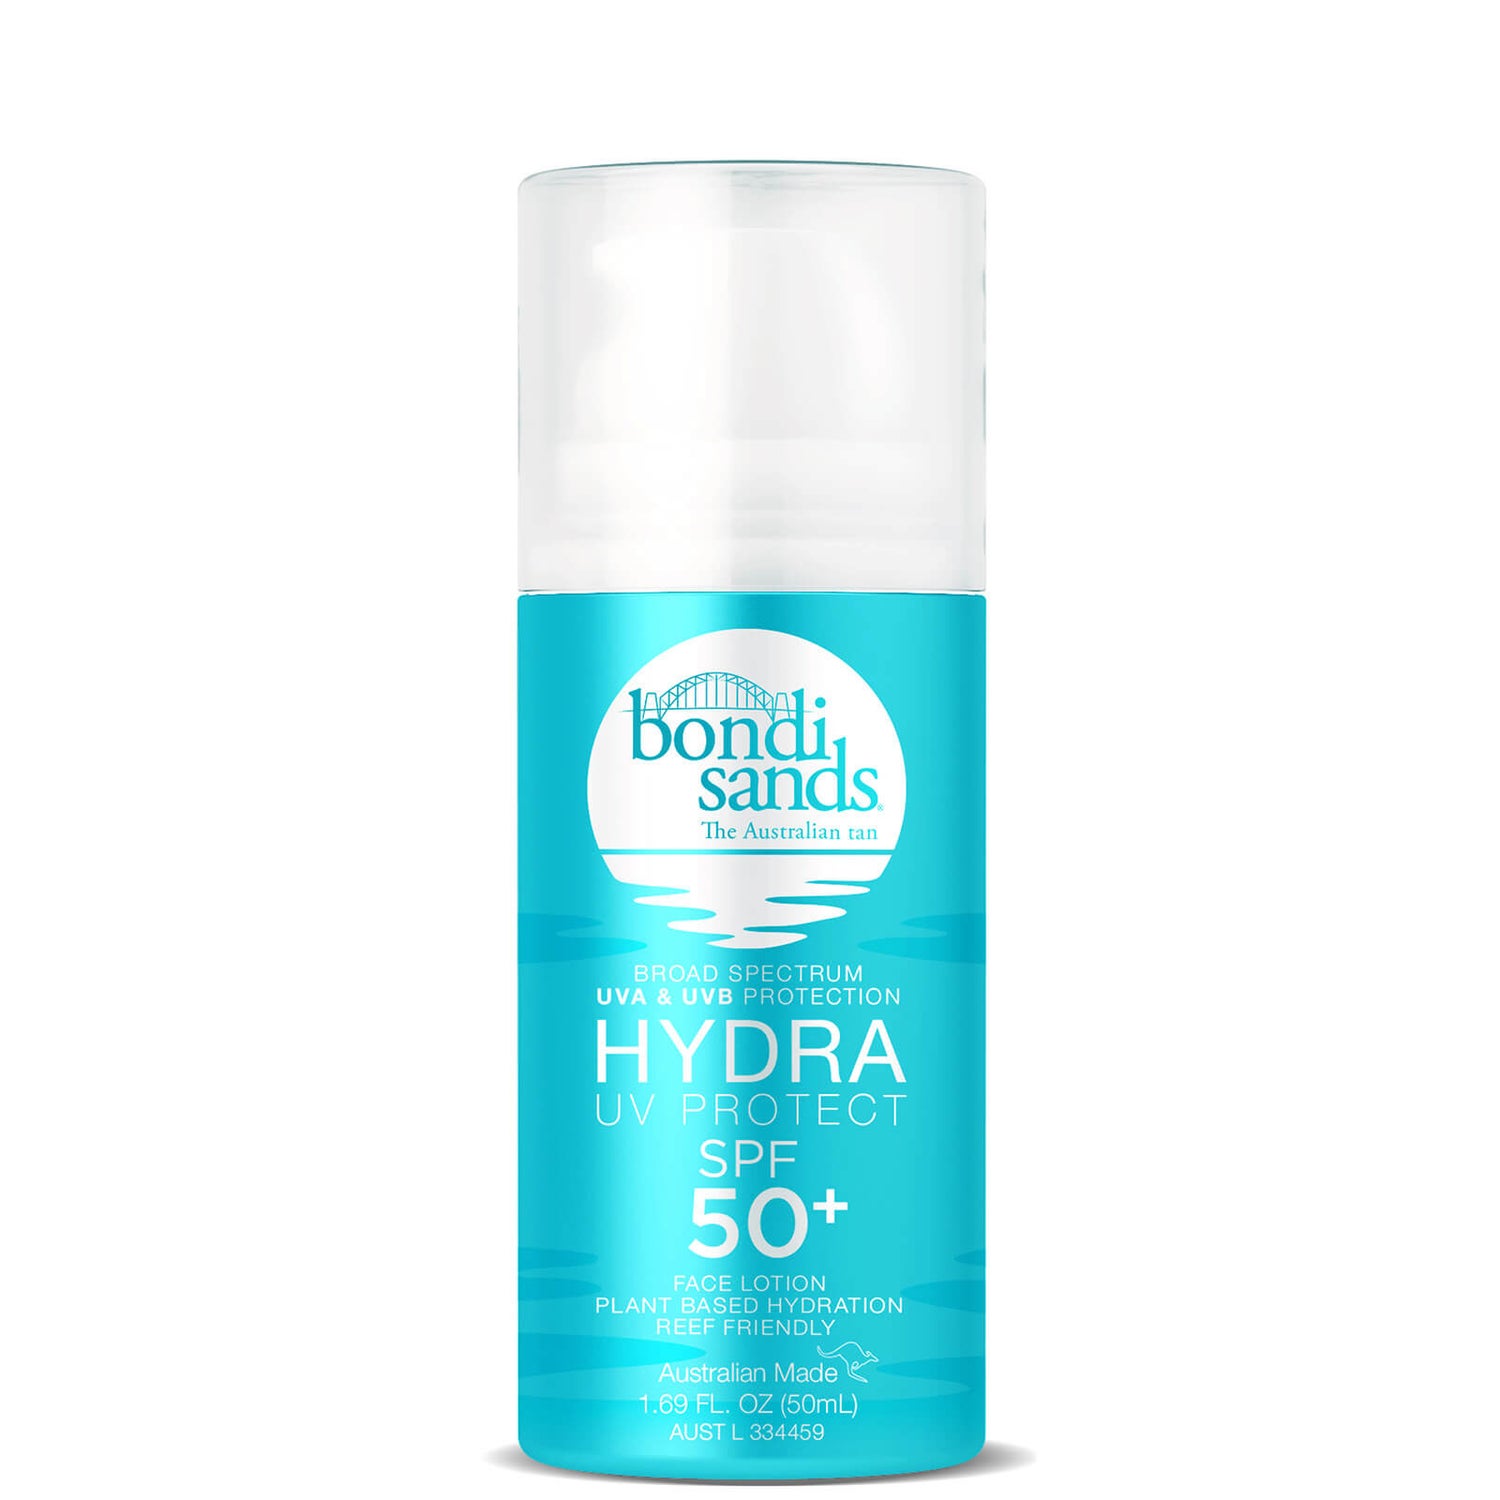 Bondi Sands Hydra Uv Protect SPF 50+ Face Lotion 50ml (AU)